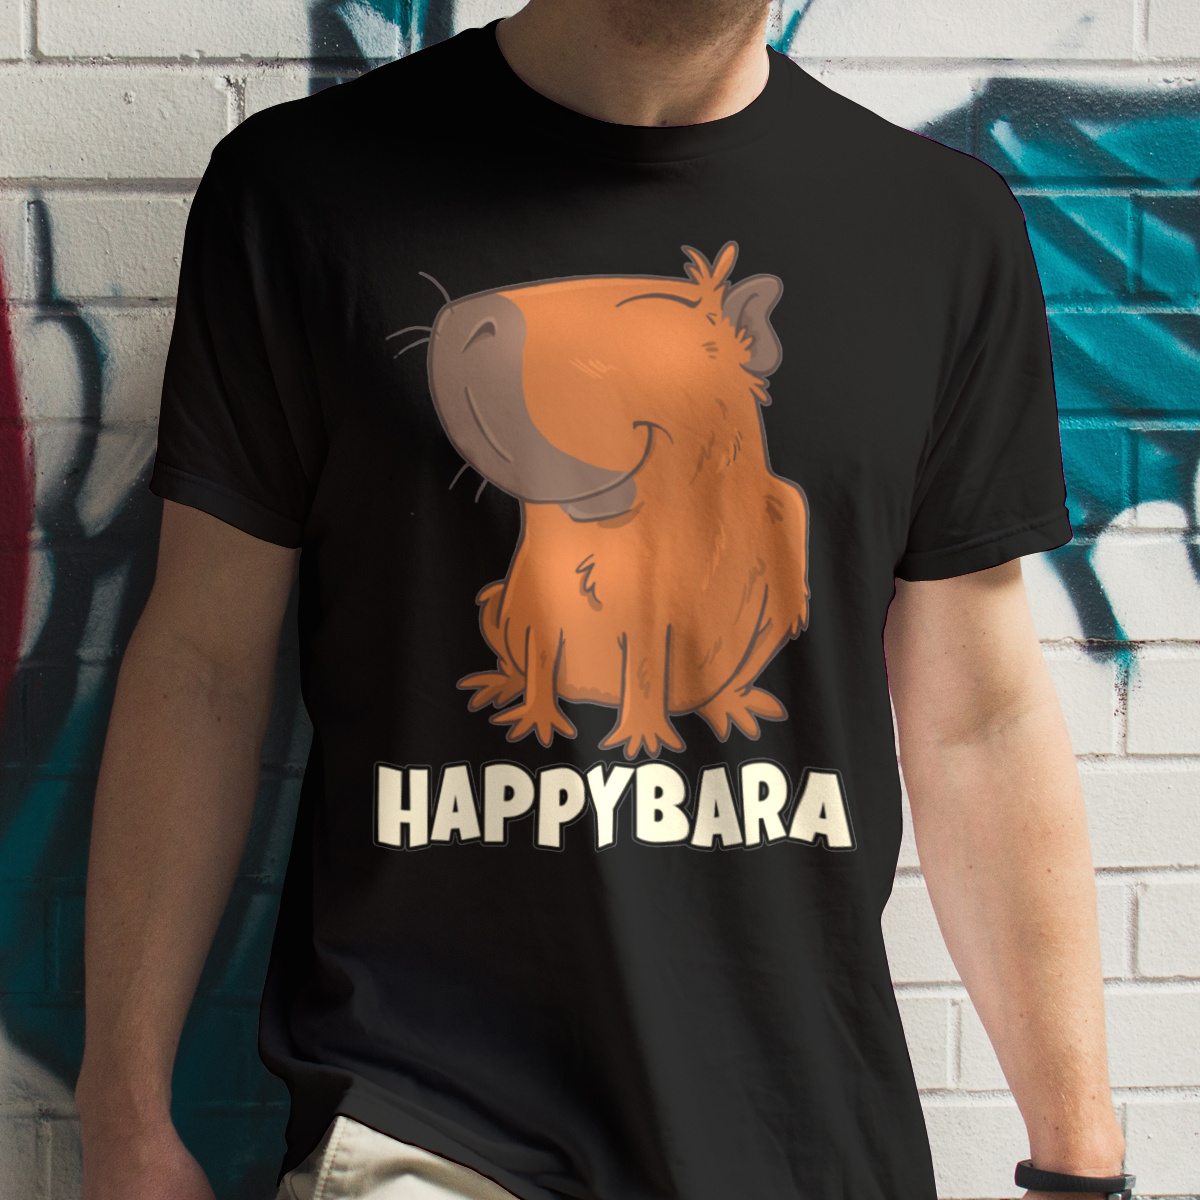 Happybara kapibara wesoła - Męska Koszulka Czarna